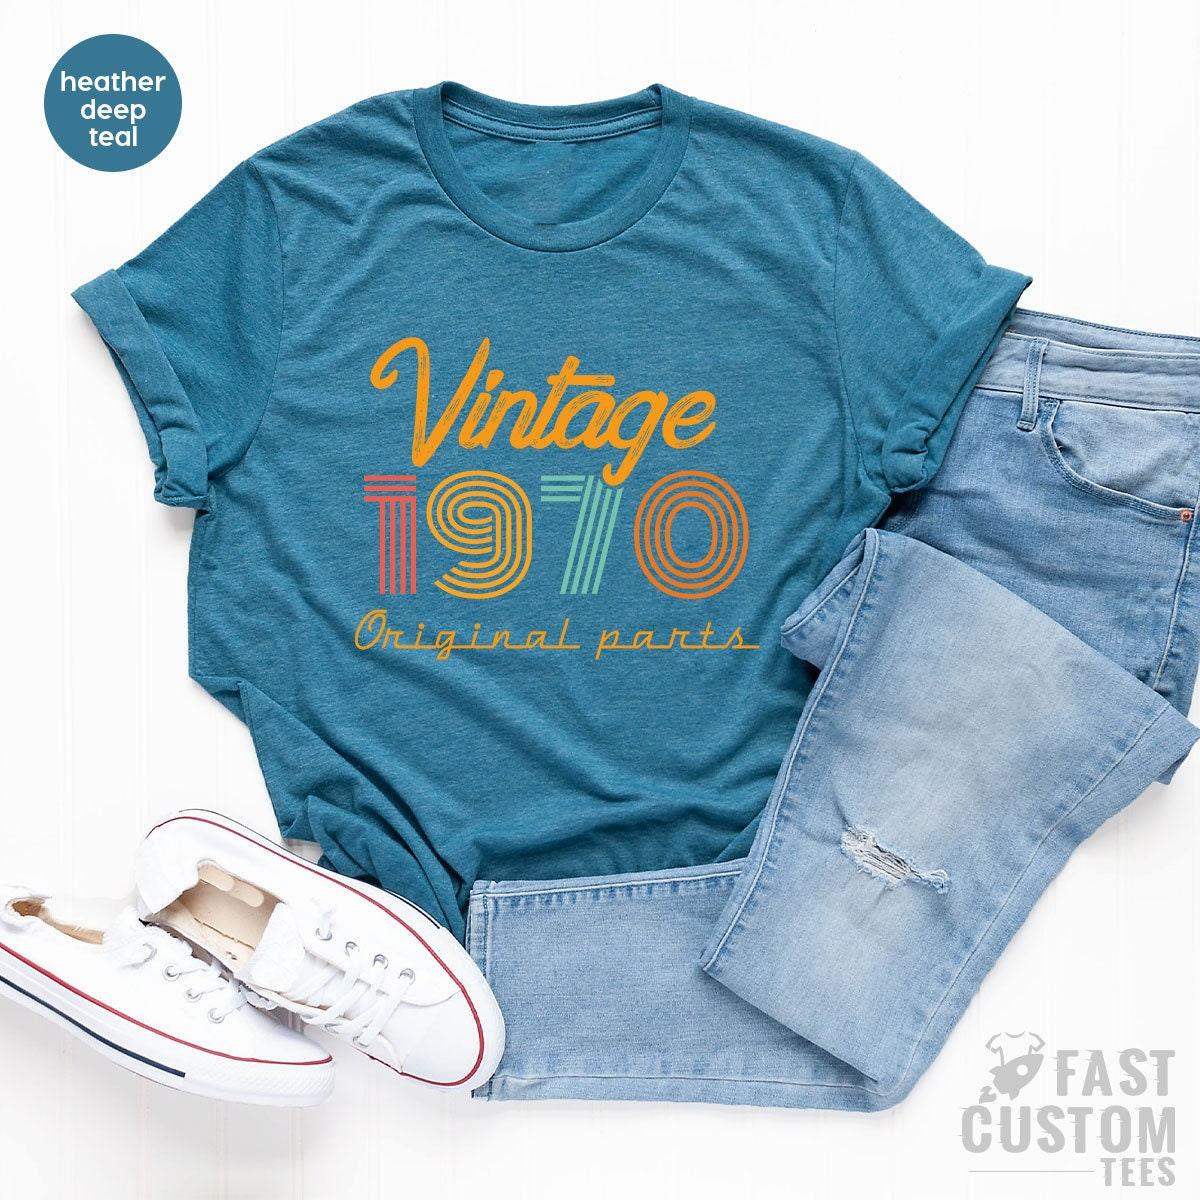 51st Birthday Shirt, Vintage T Shirt, Vintage 1970 Shirt, 51st Birthday Gift For Women, 51st Birthday Shirt Men, Retro Shirt, Vintage Shirts - Fastdeliverytees.com